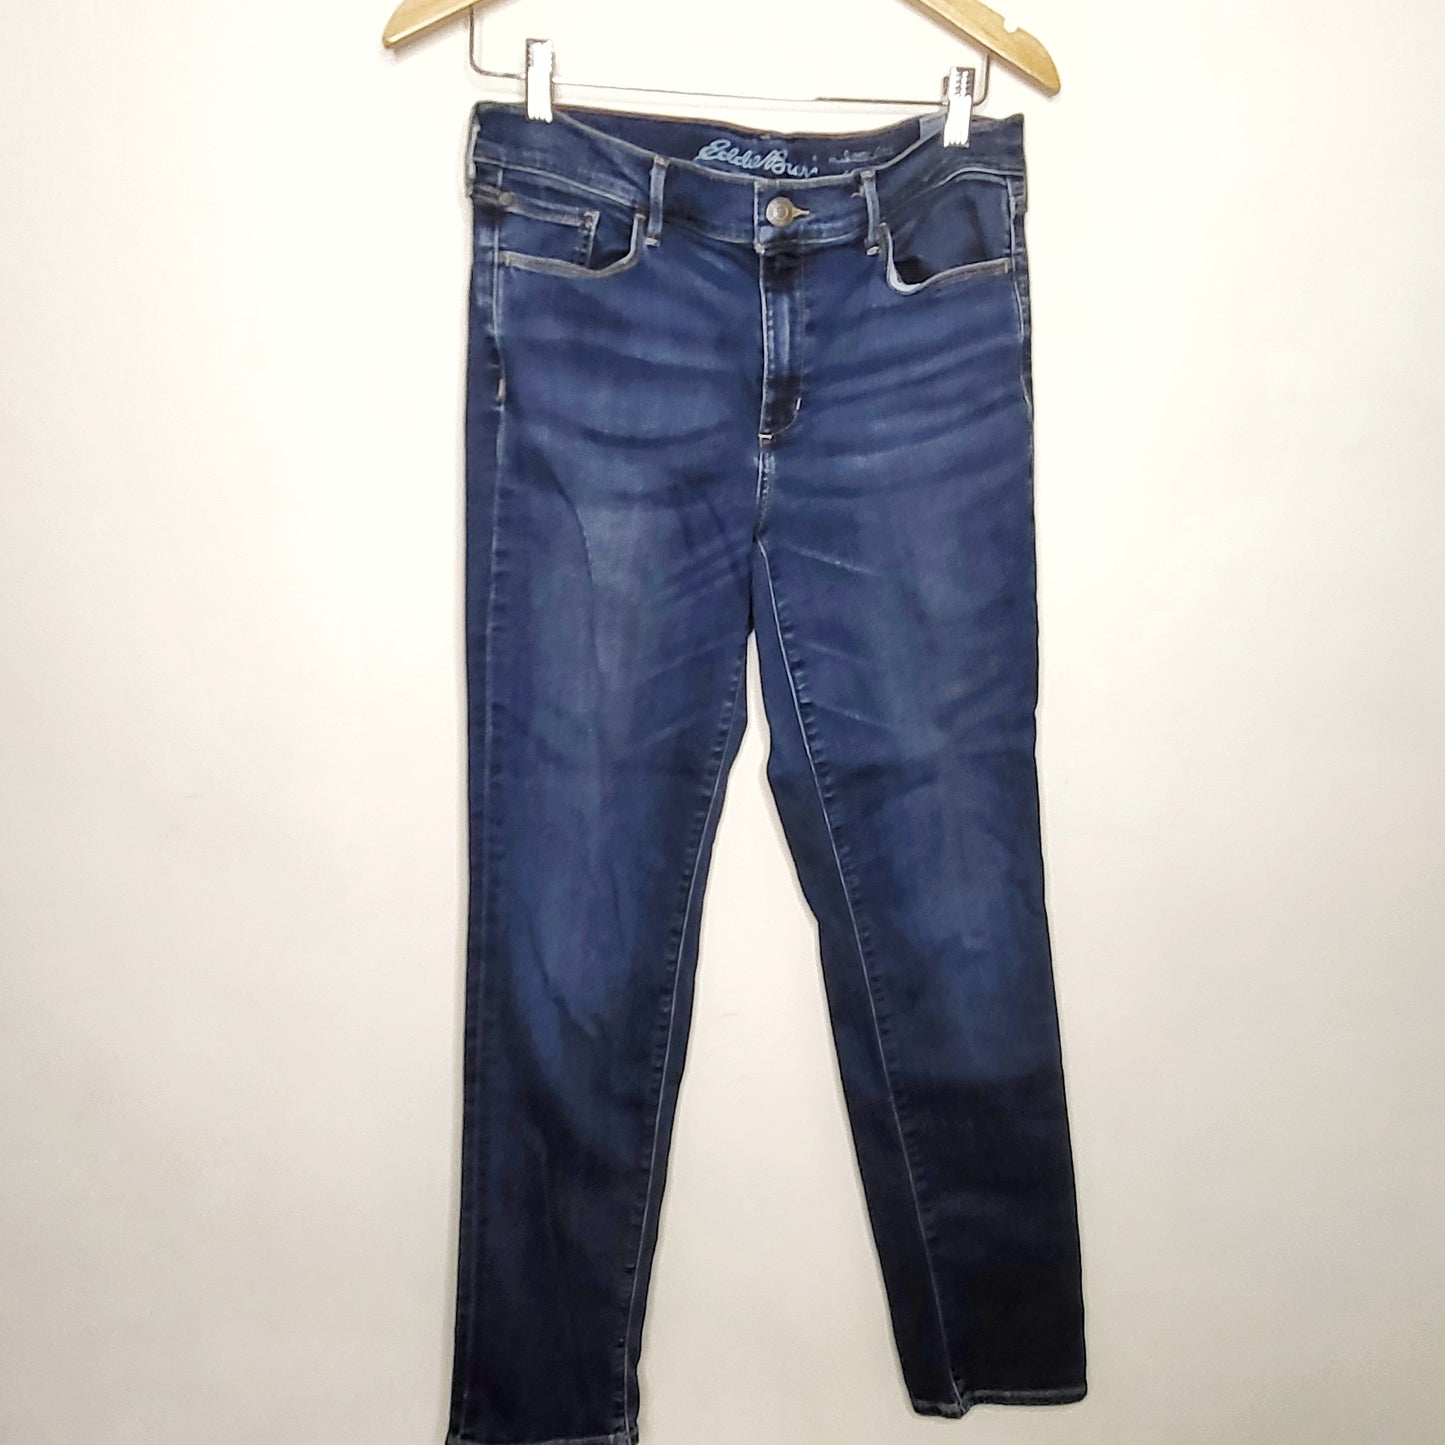 JBAB2 - Eddie Bauer cropped boyfriend jeans, size 6 (measure like a large), good condition